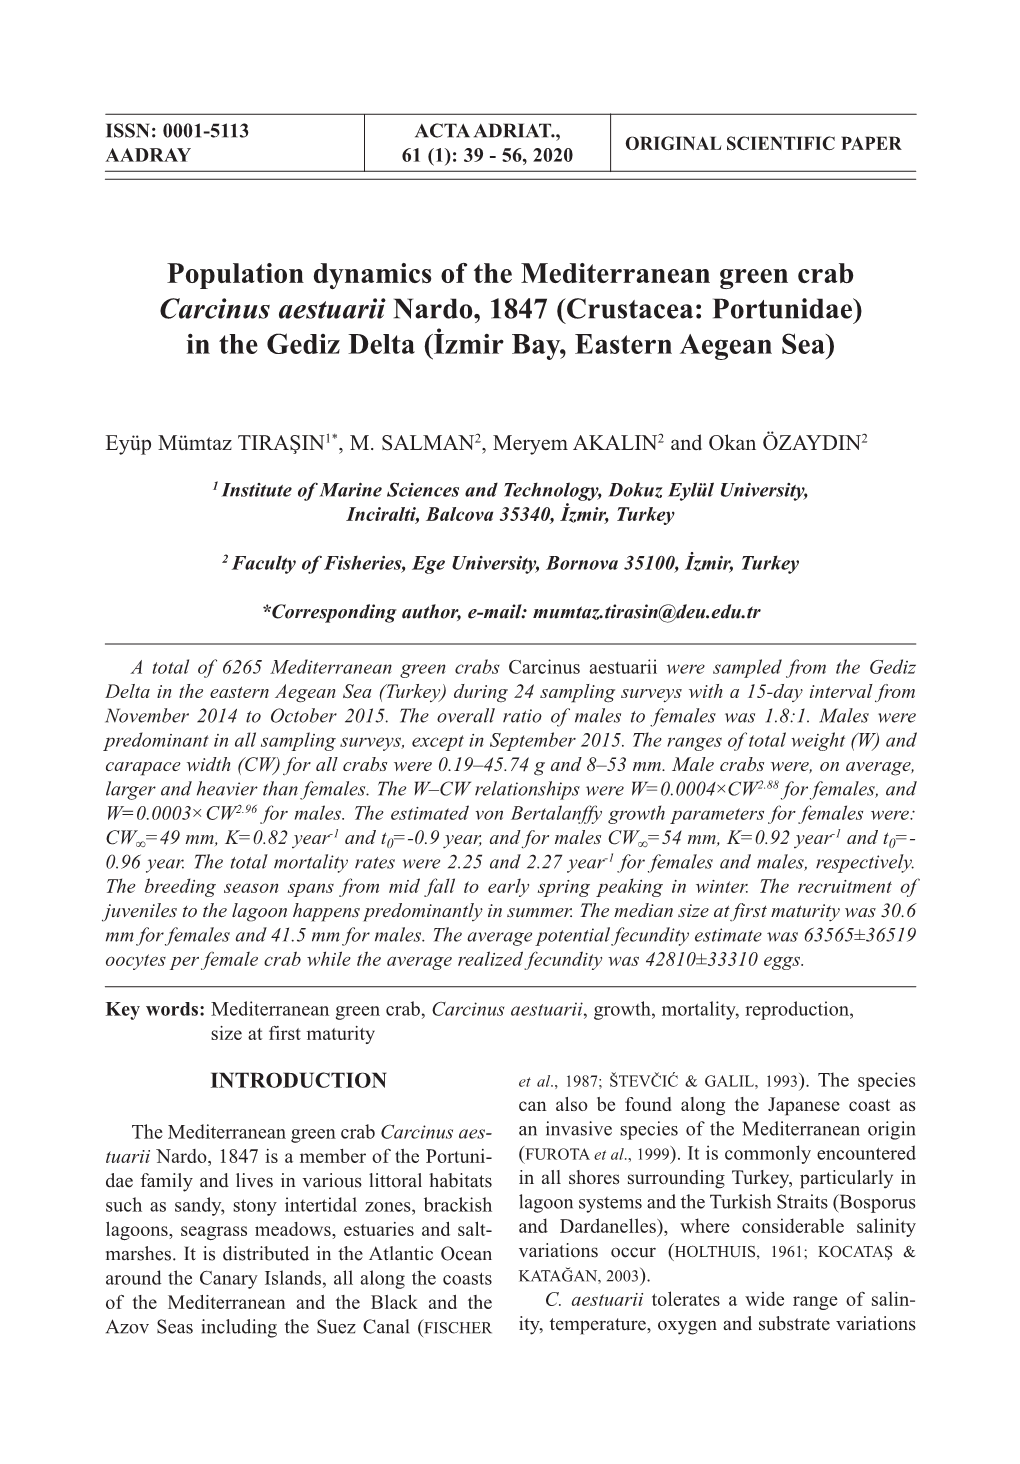 Population Dynamics of the Mediterranean Green Crab Carcinus Aestuarii Nardo, 1847 (Crustacea: Portunidae) in the Gediz Delta (İzmir Bay, Eastern Aegean Sea)